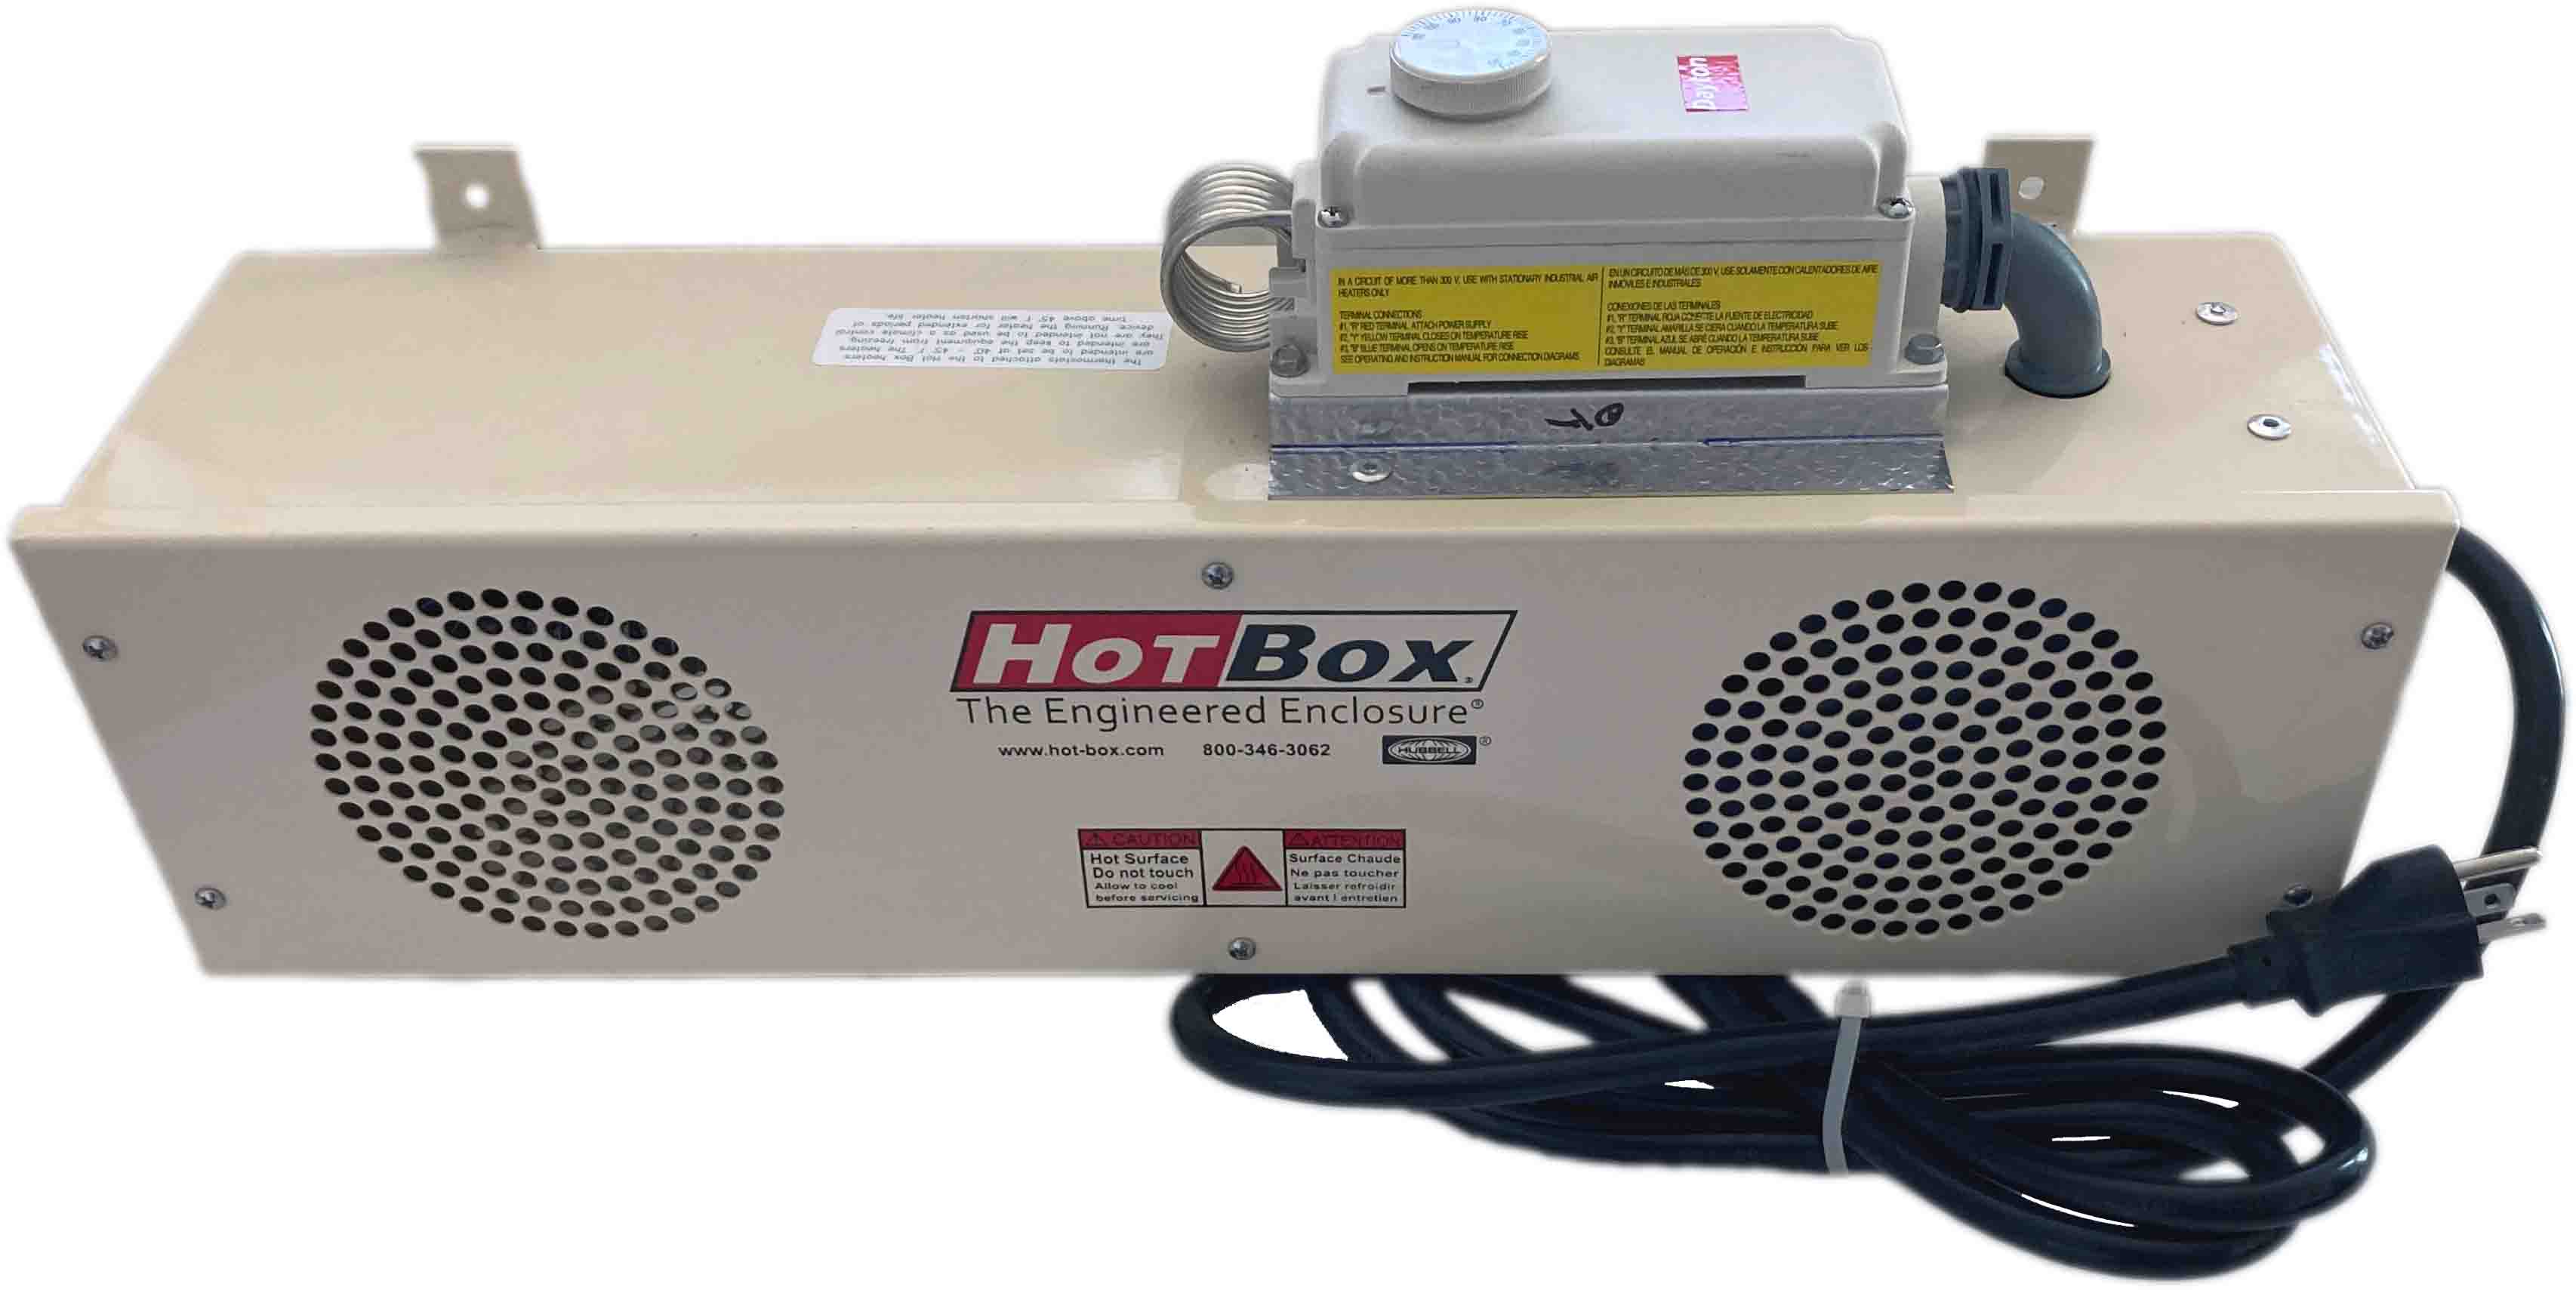 HotBox enclosure heater